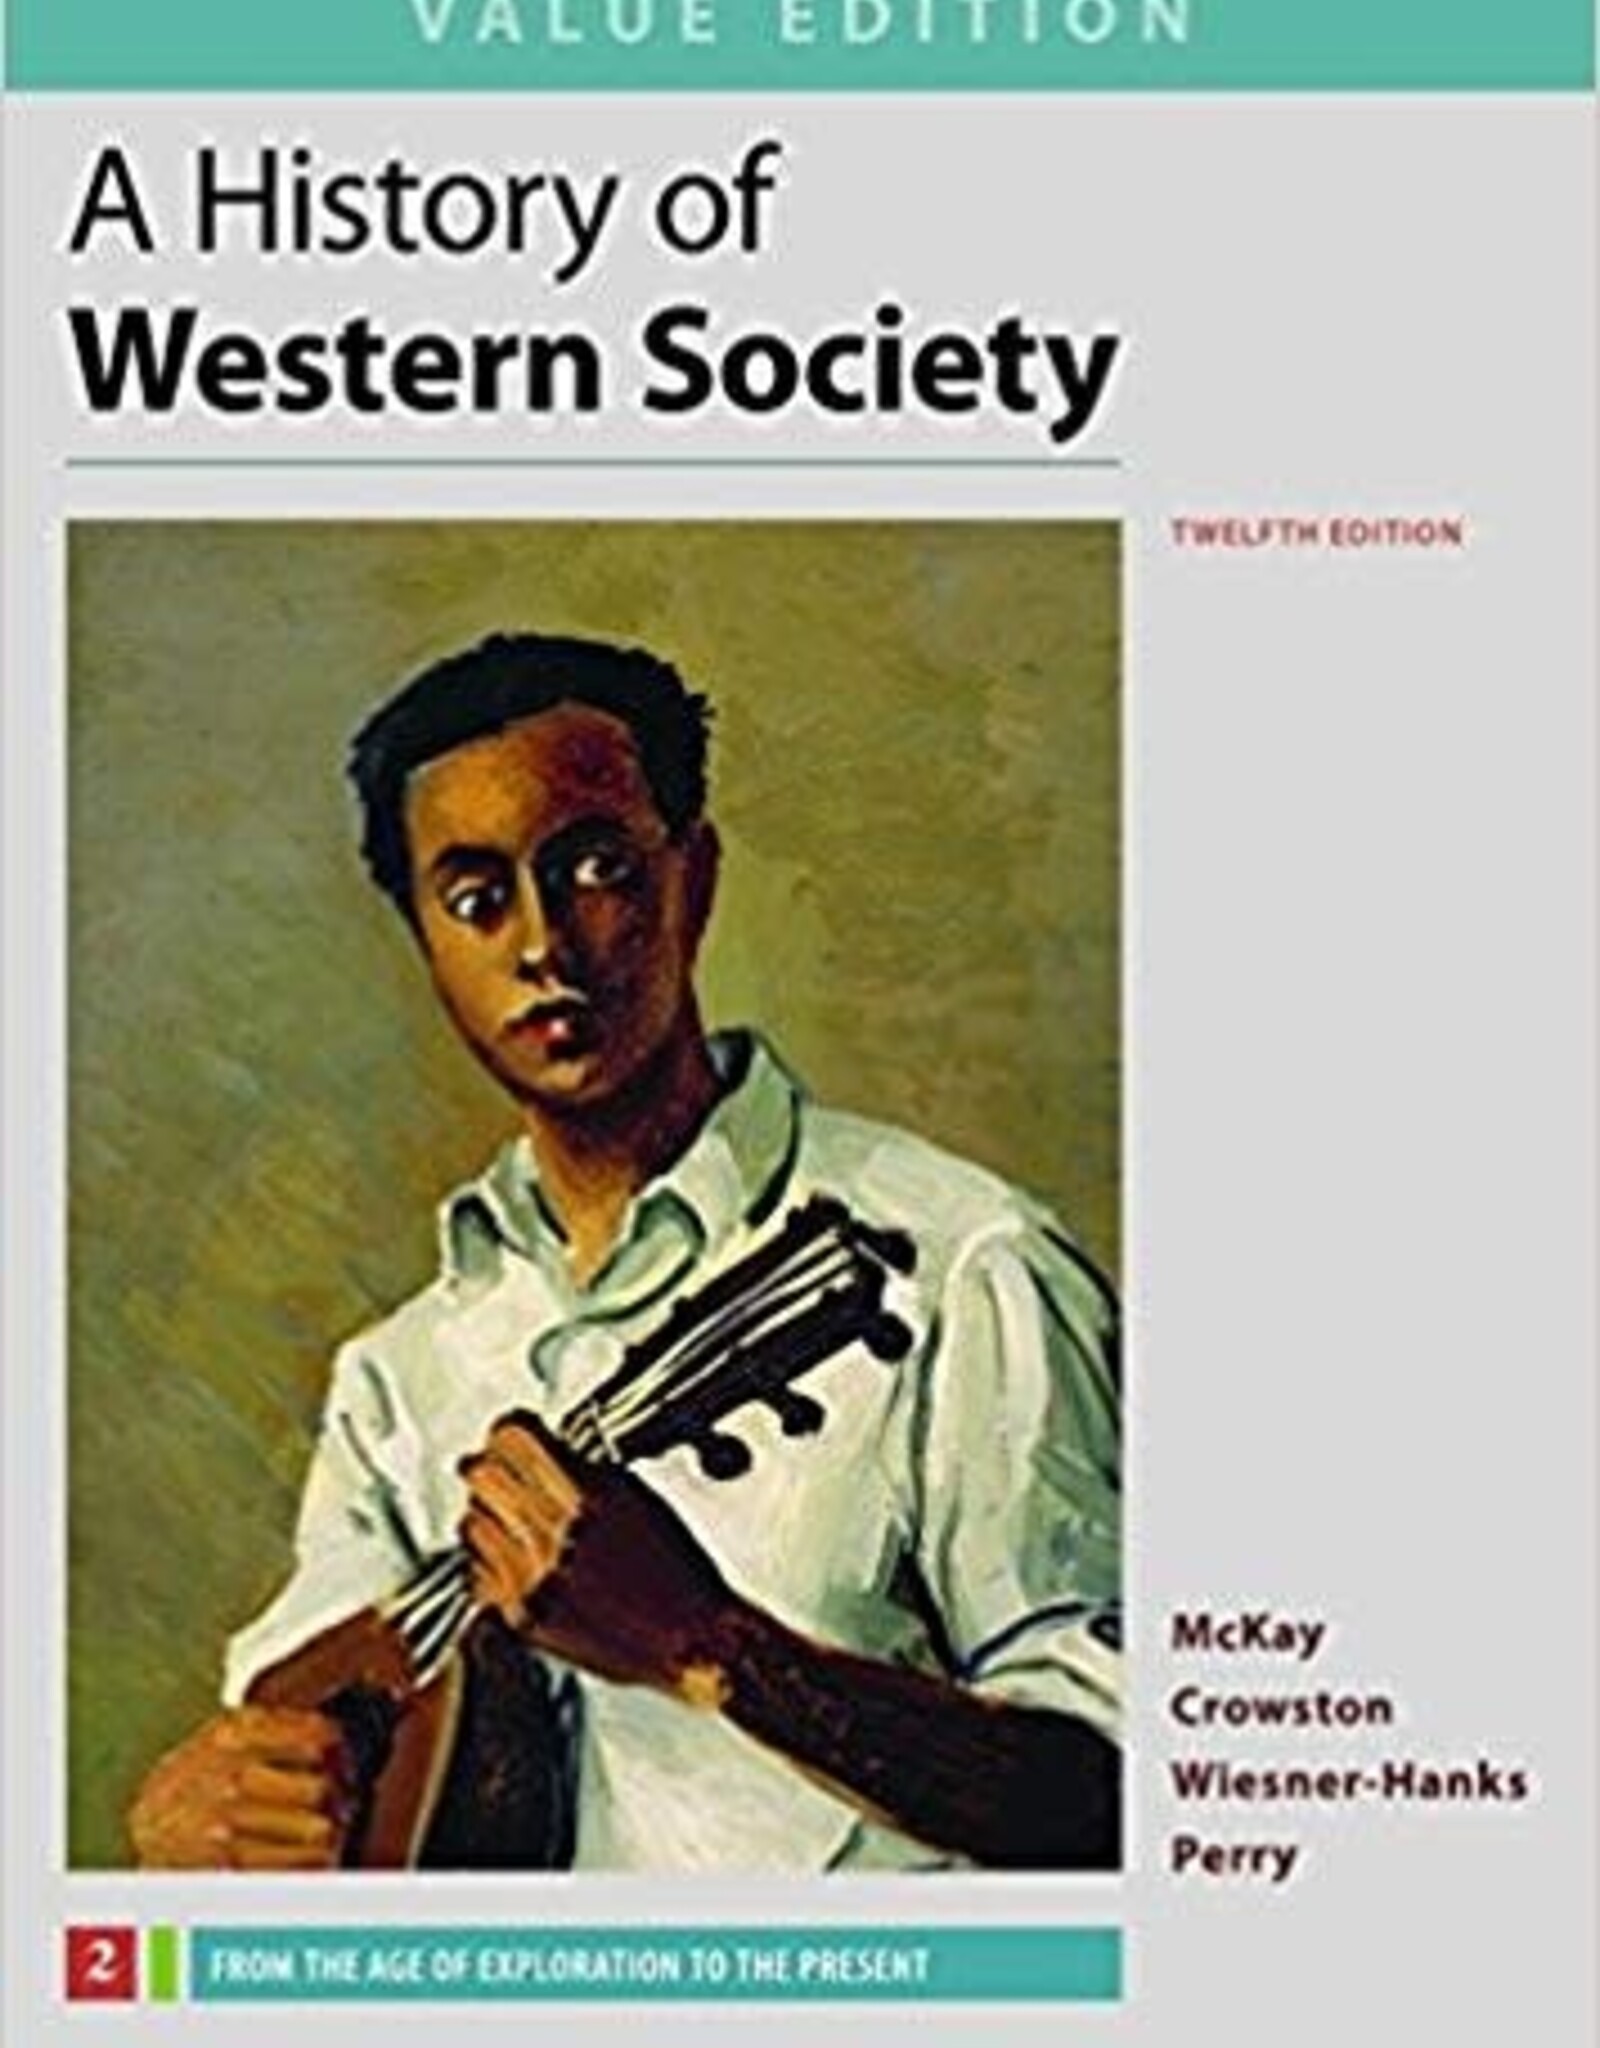 History of Western Society V2 - 14th Edition